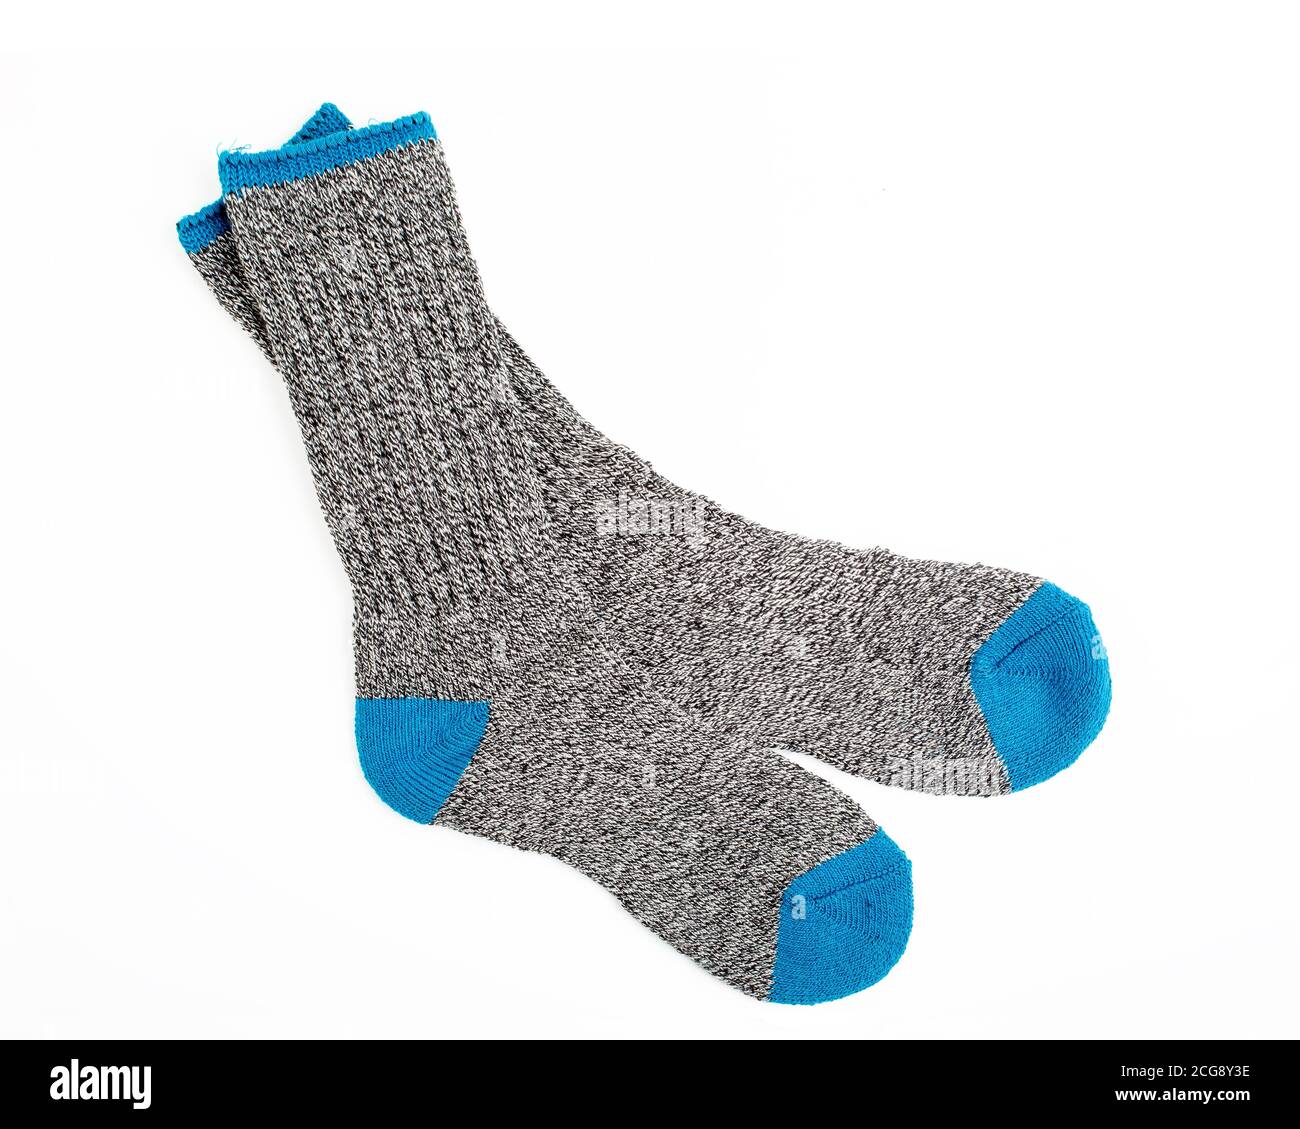 Woolen sport socks for cooler weather. Stock Photo